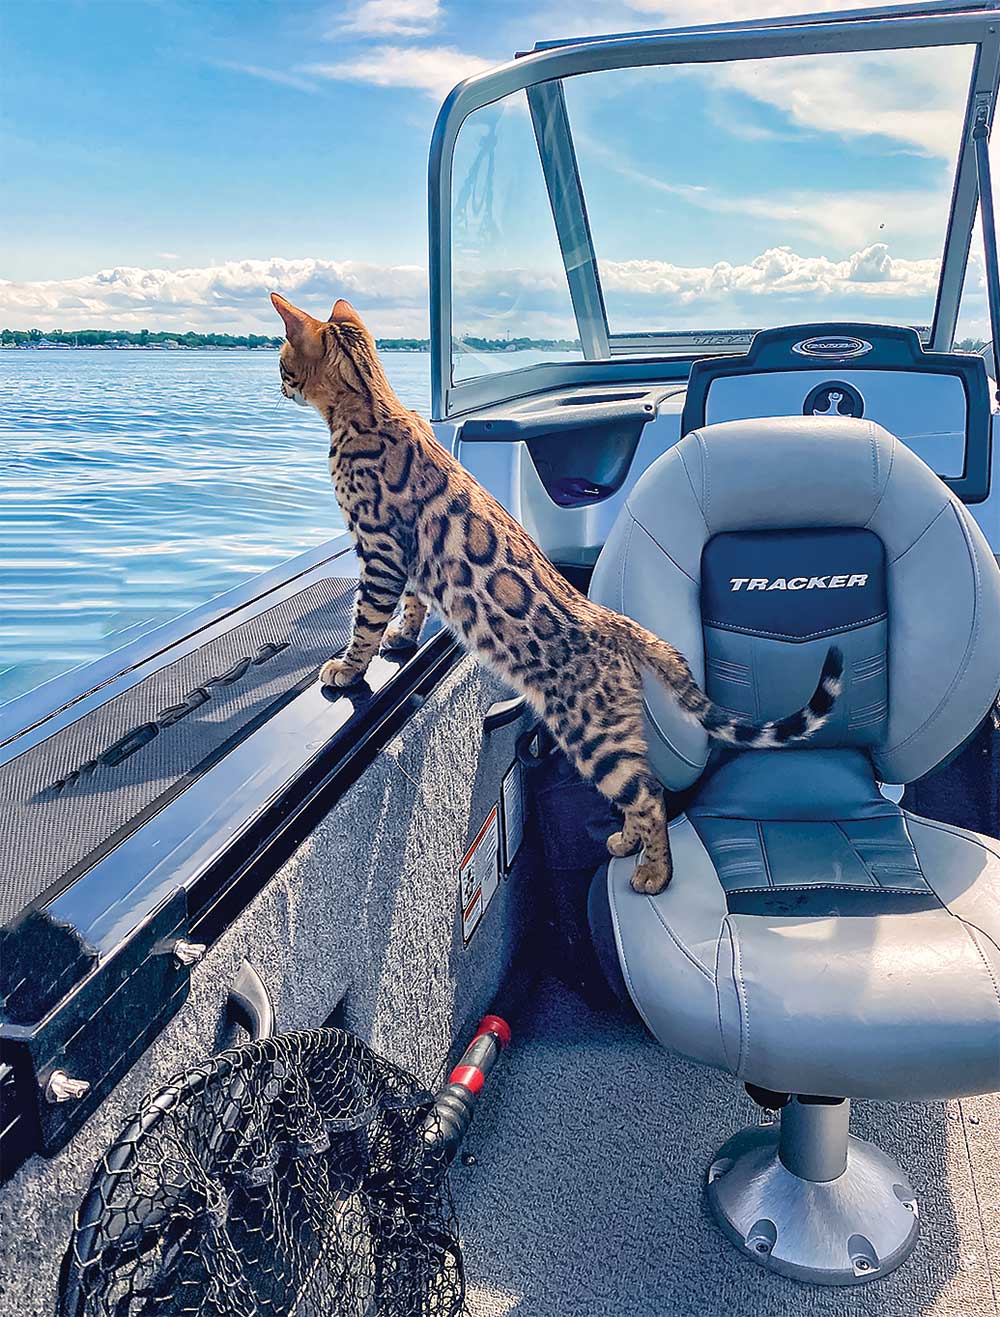 Poseidon the cat on a boat